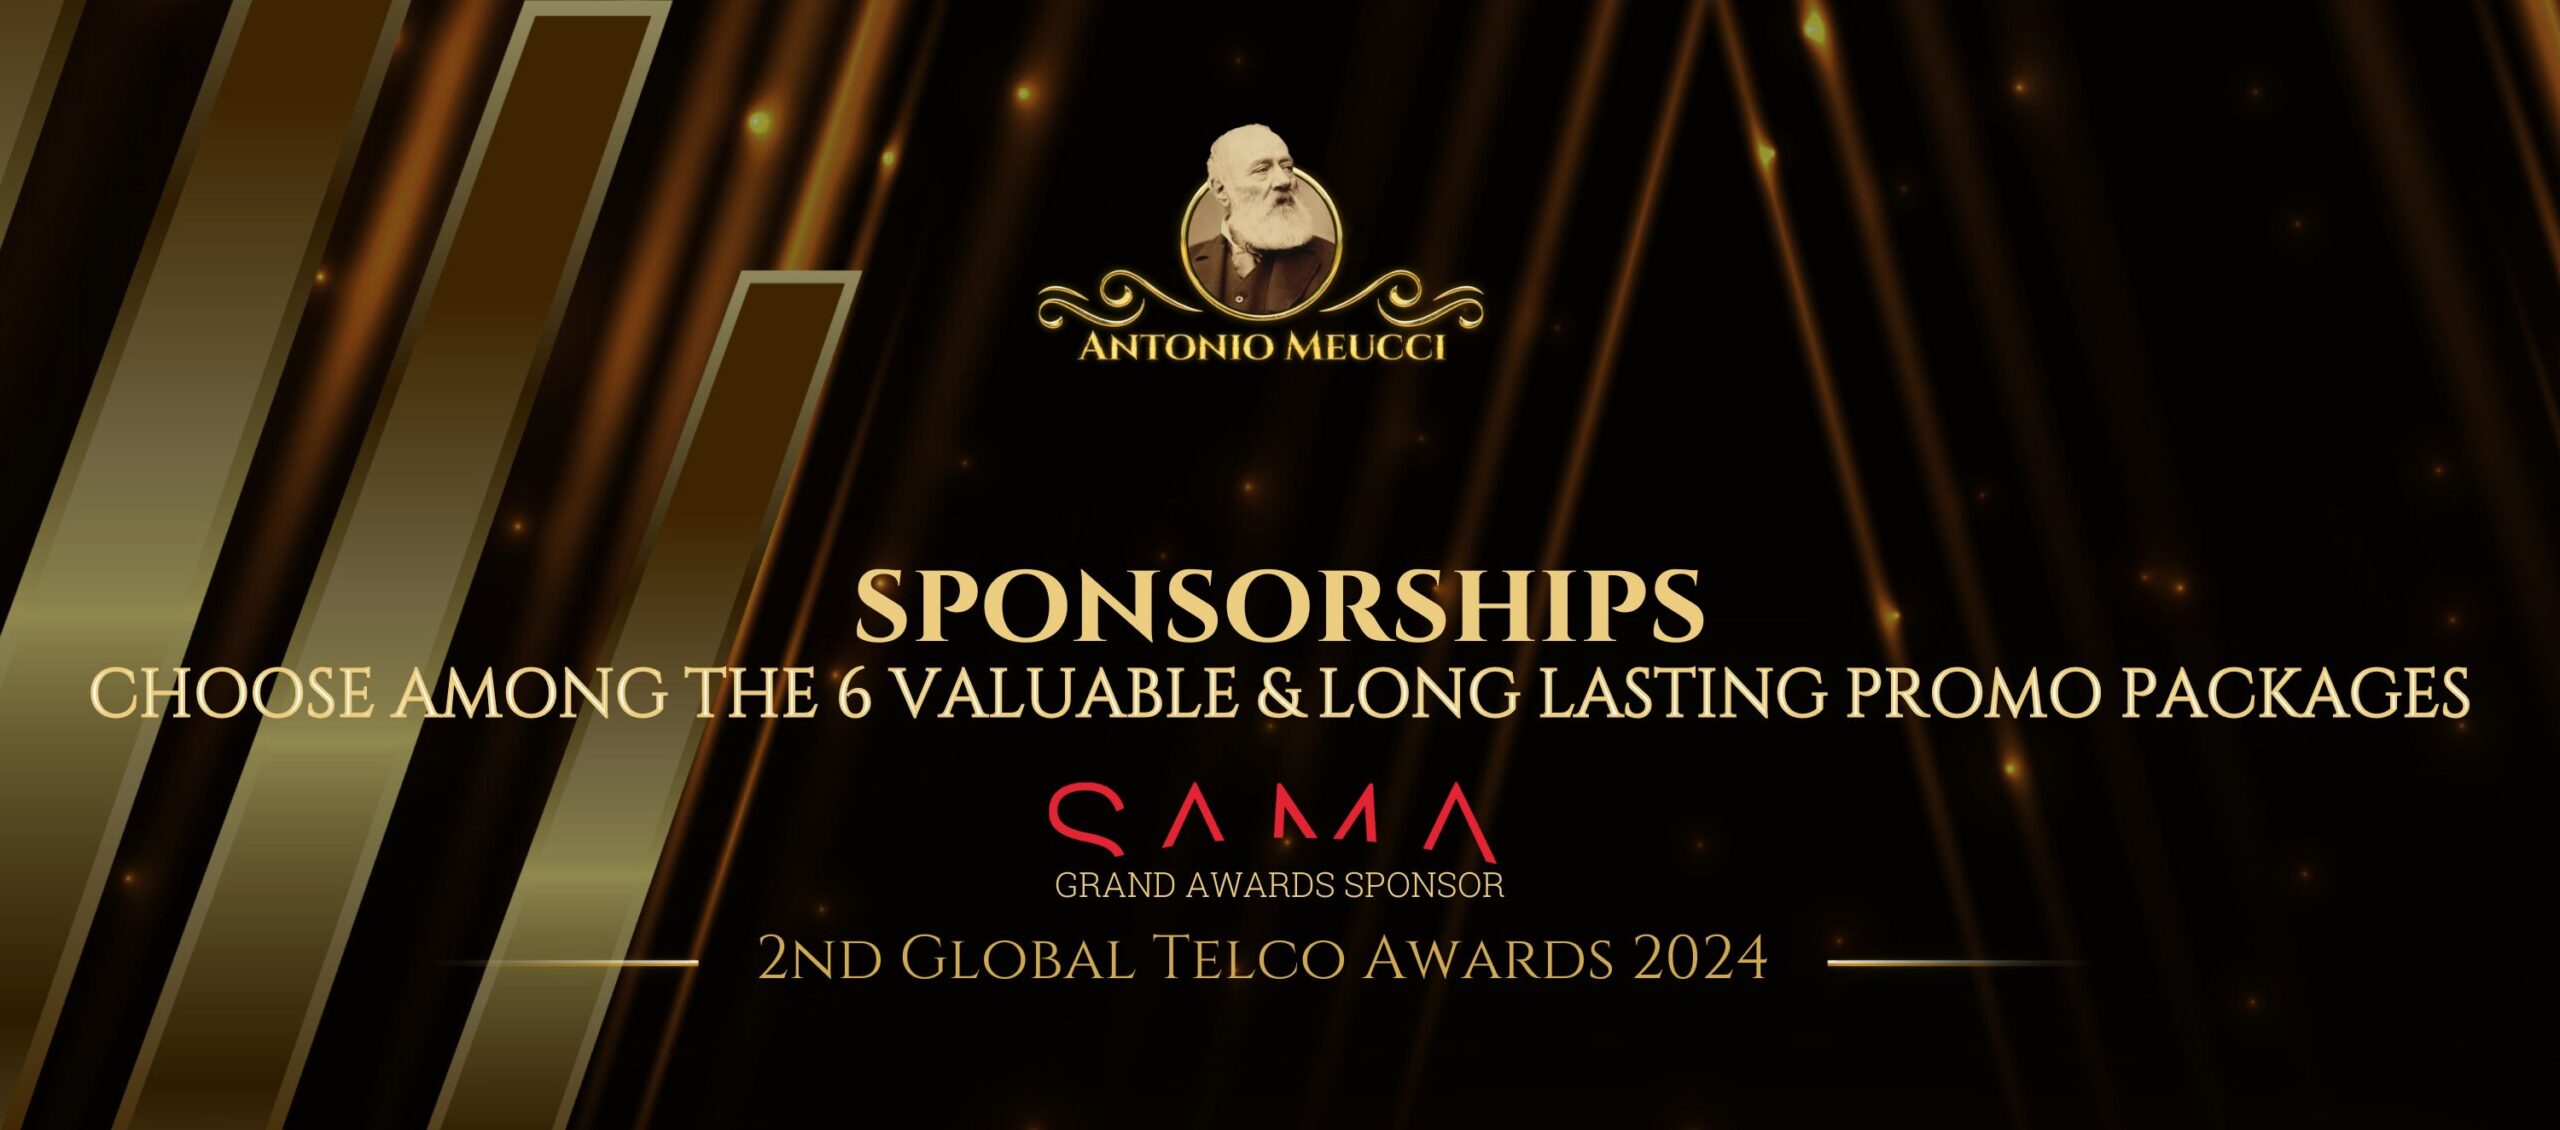 ANTONIO MEUCCI AWARDS 2024 SPONSORED BY SAMA TELECOM